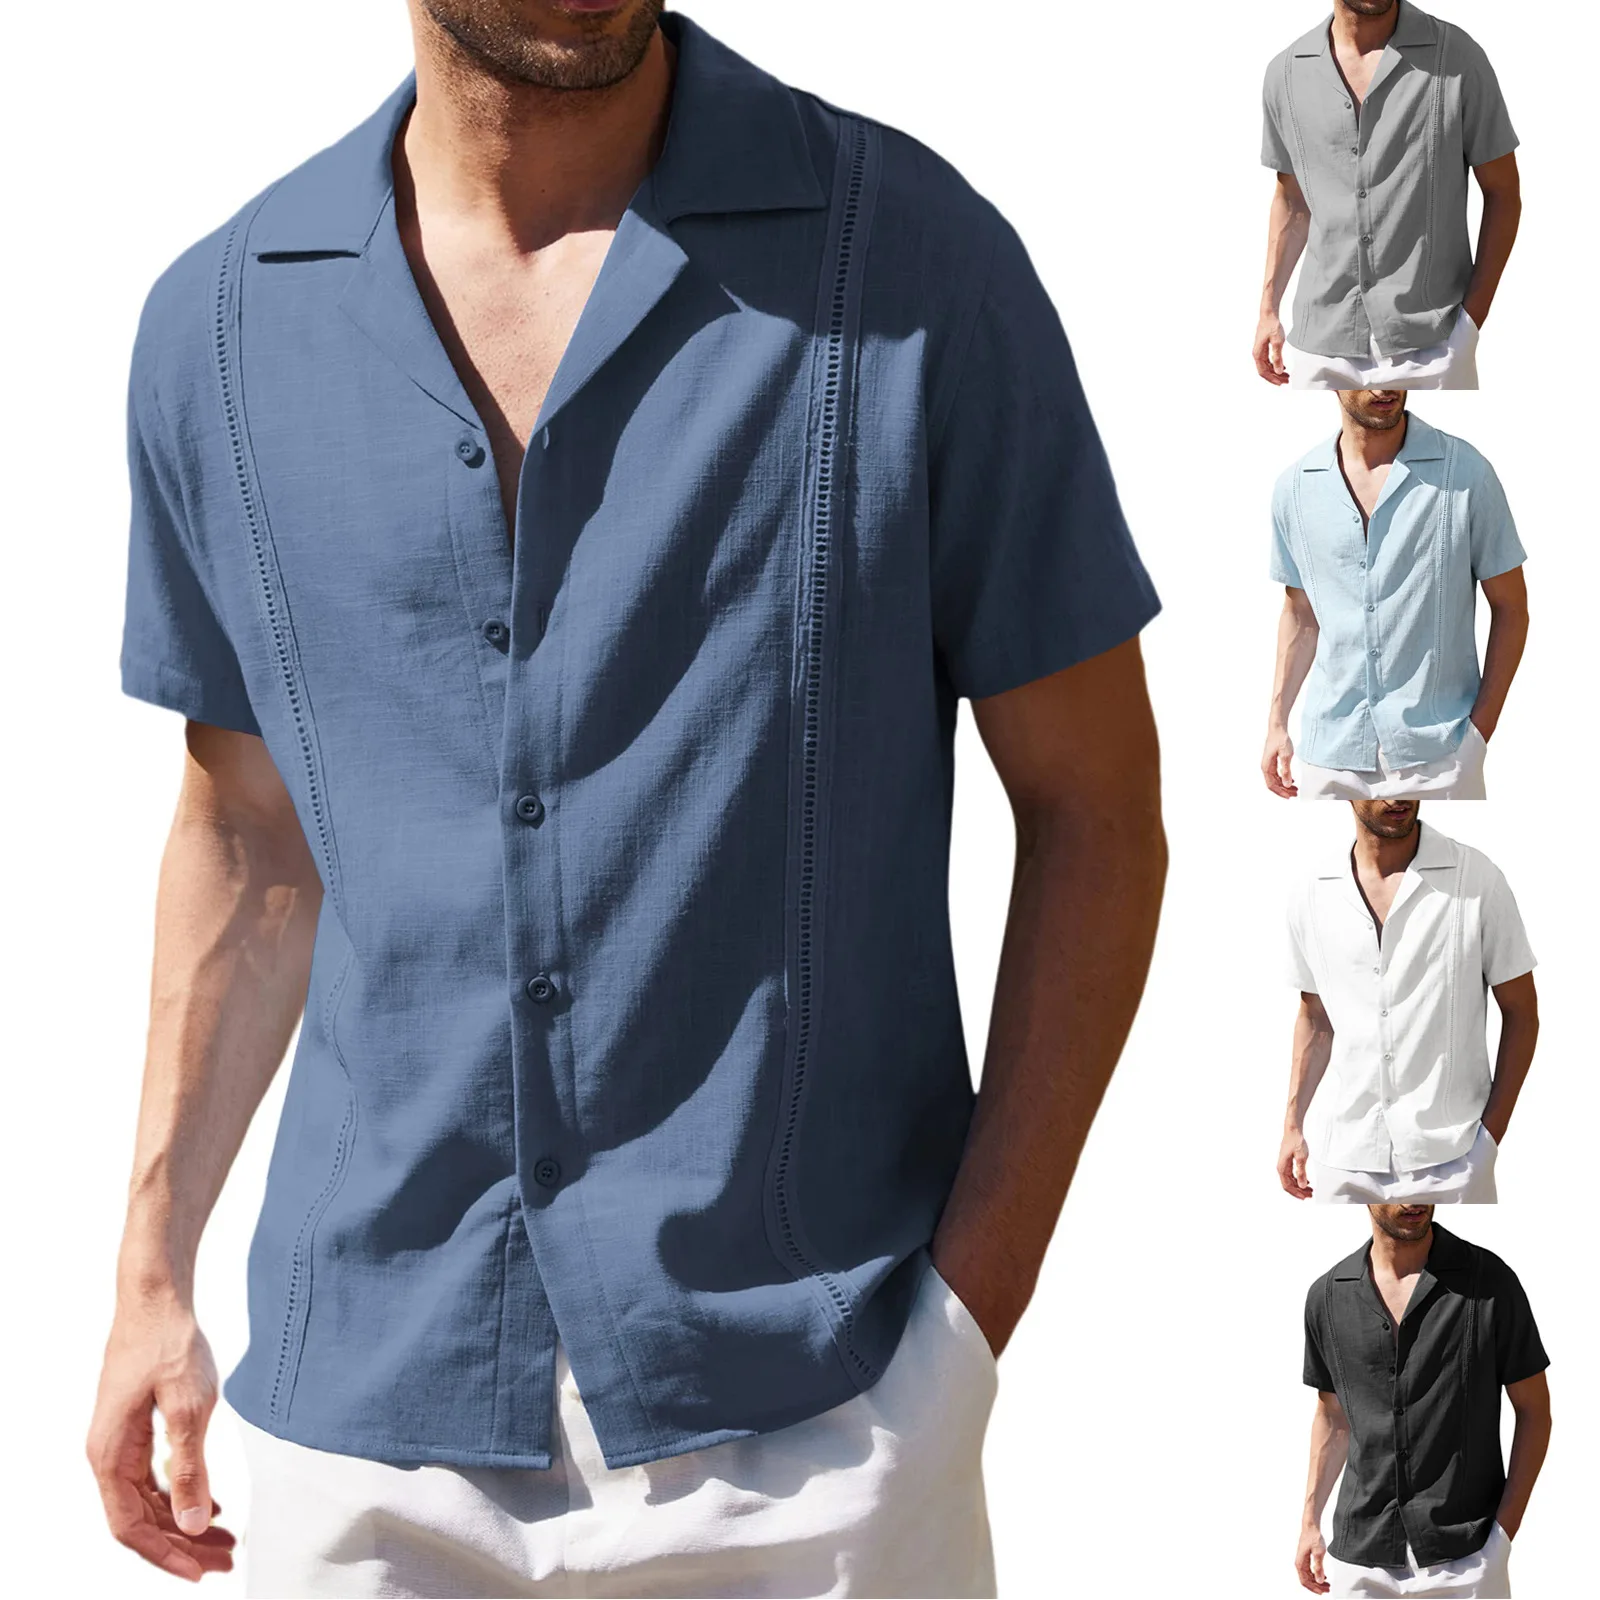 2022 Hot Sale Men's Linen Cotton Shirts Casual Cuban Guayabella V-neck Shirts Short Sleeve Solid Color Button Beach Shirts